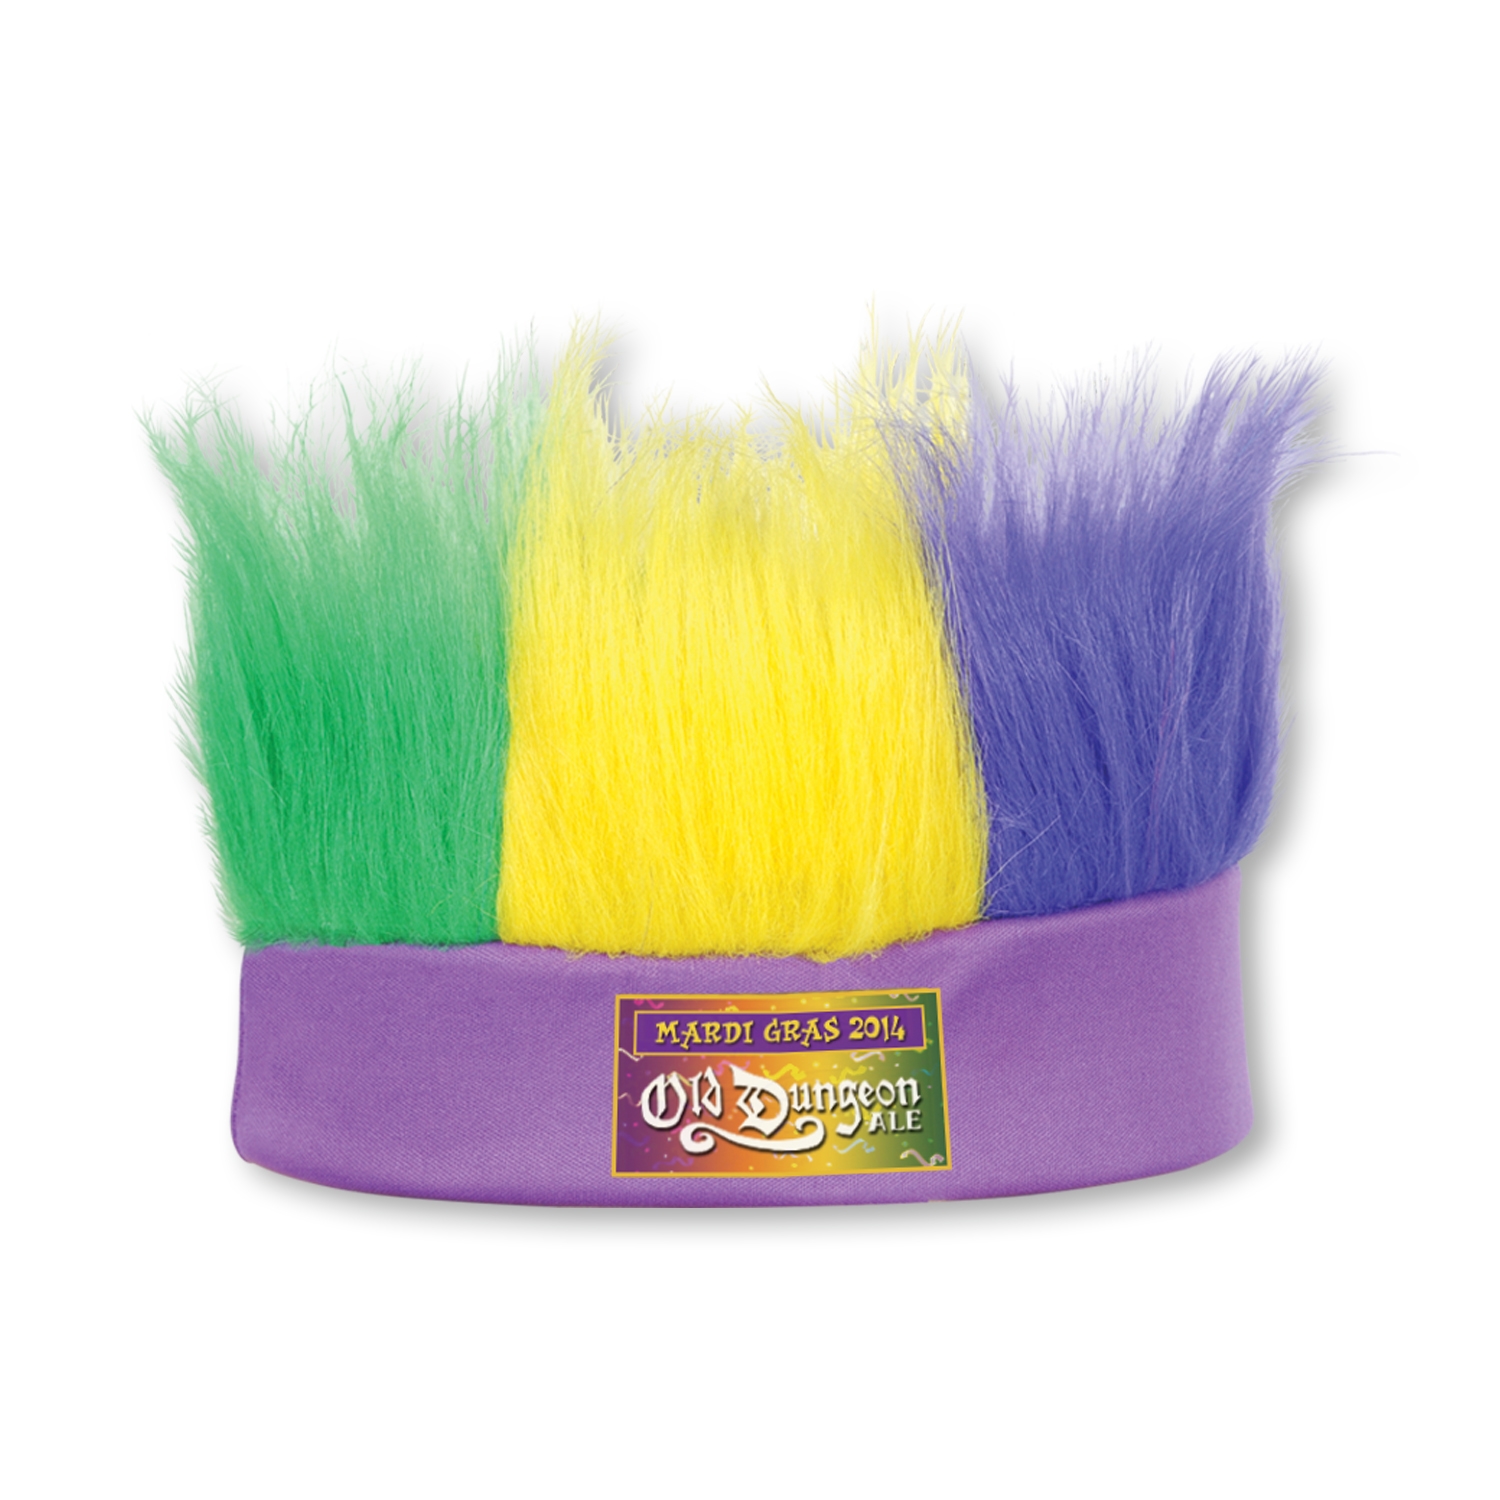 Custom Mardi Gras Hairy Headbands Custom Mardi Gras Hairy Headbands, custom, mardi gras, party favor, headbands, wholesale, inexpensive, bulk